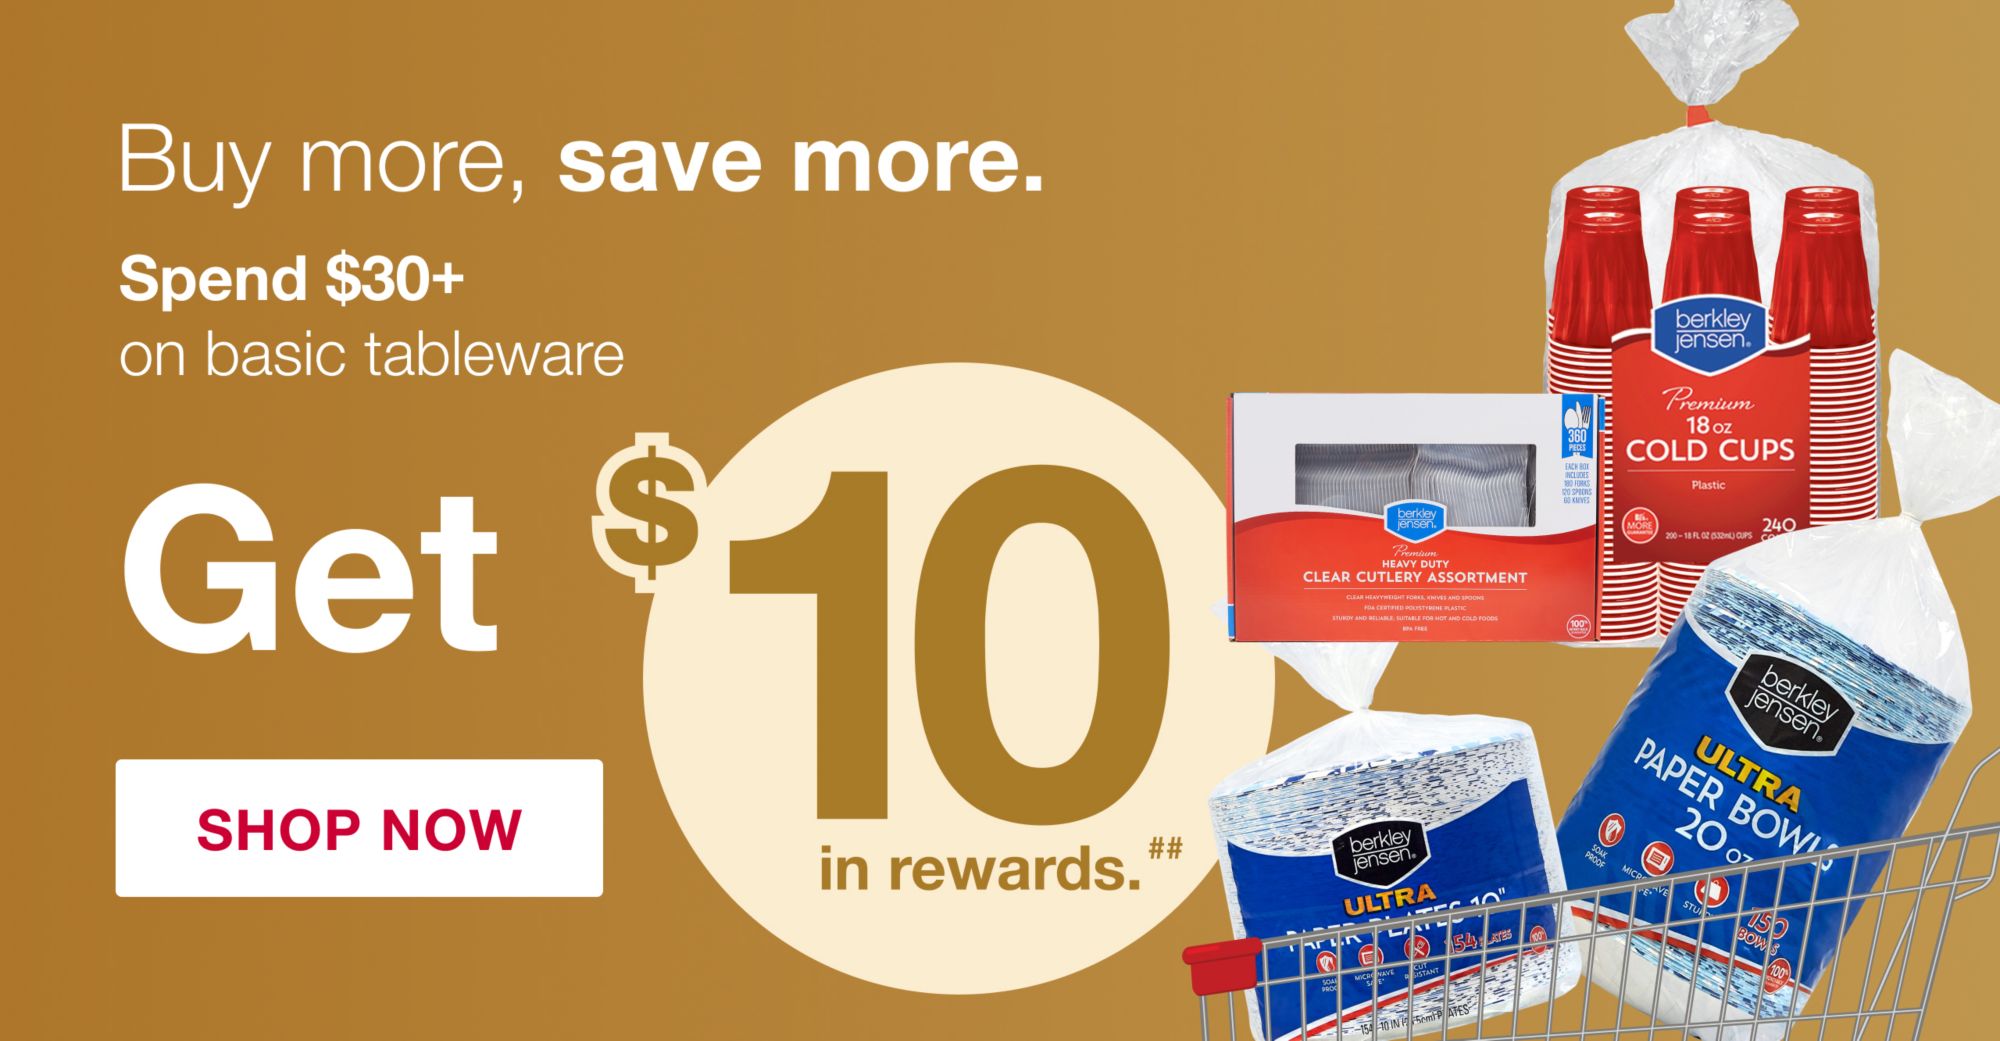 Spend $30 on basic tableware get $10 in rewards.#